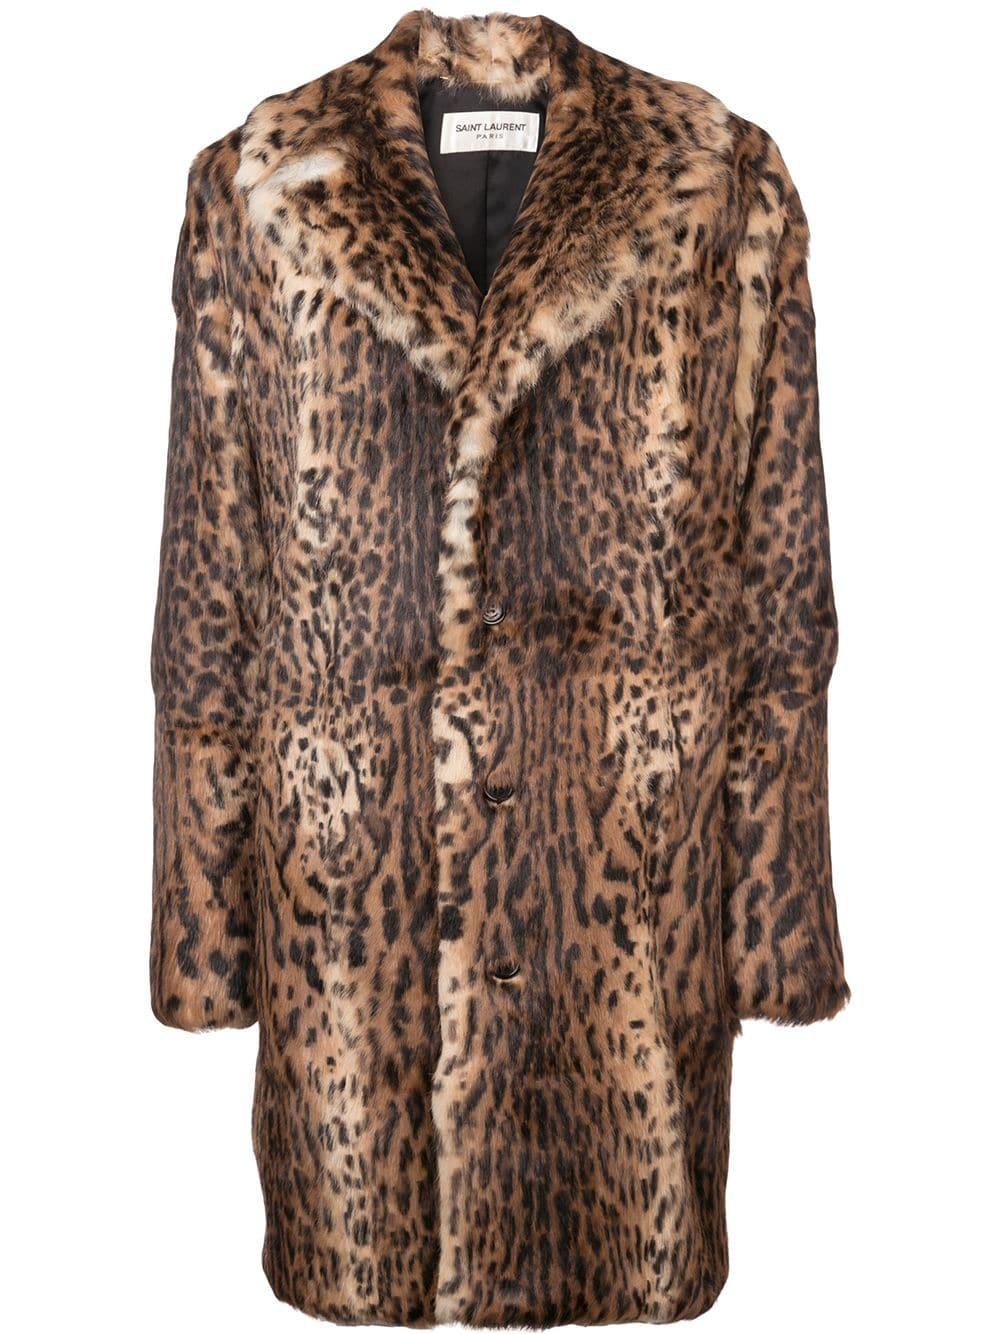 Saint Laurent Leopard Print Fur Coat in Brown | Lyst